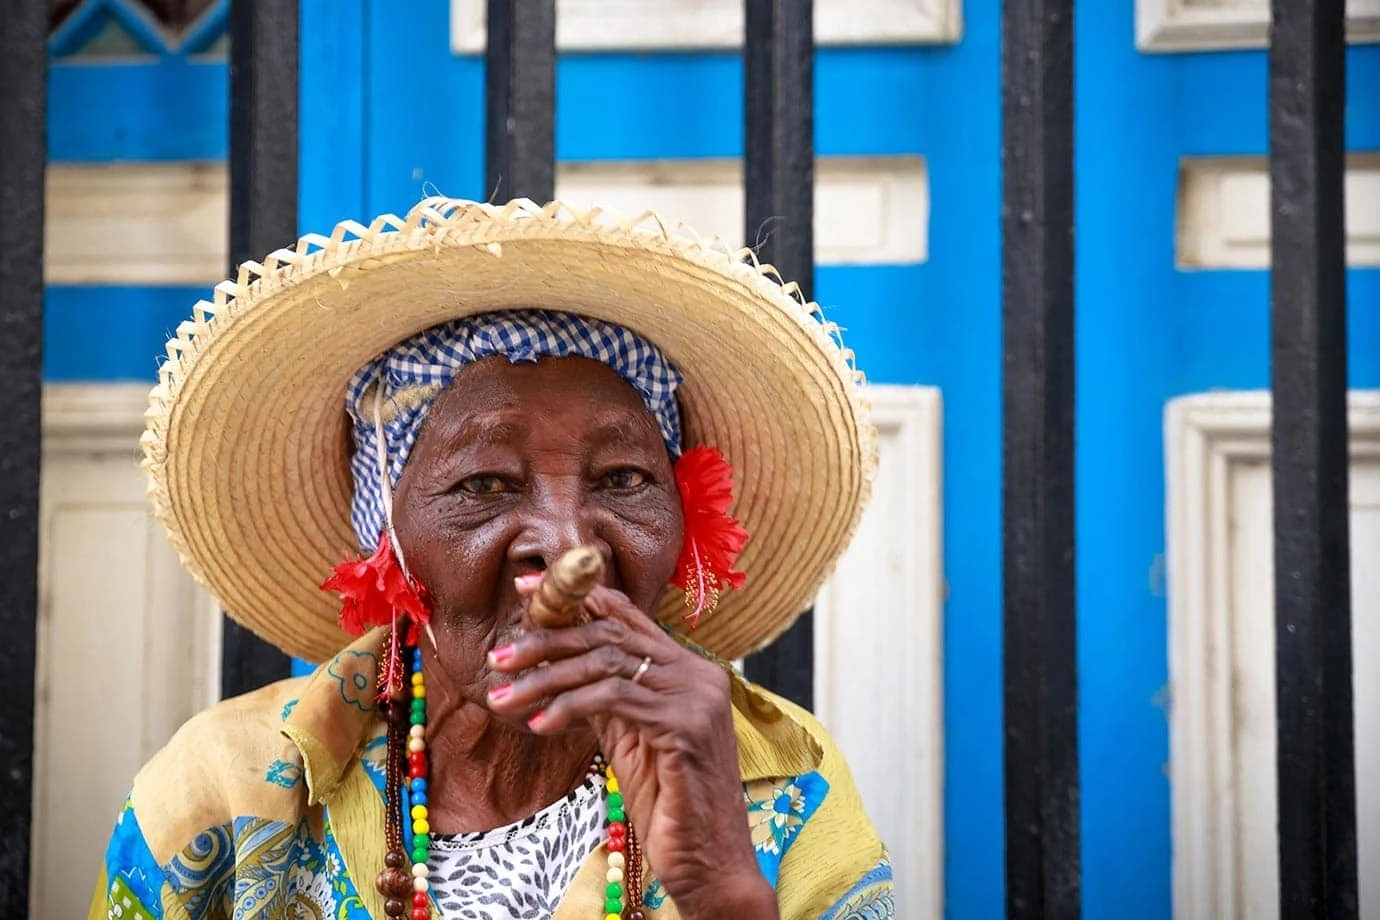 The People of Cuba